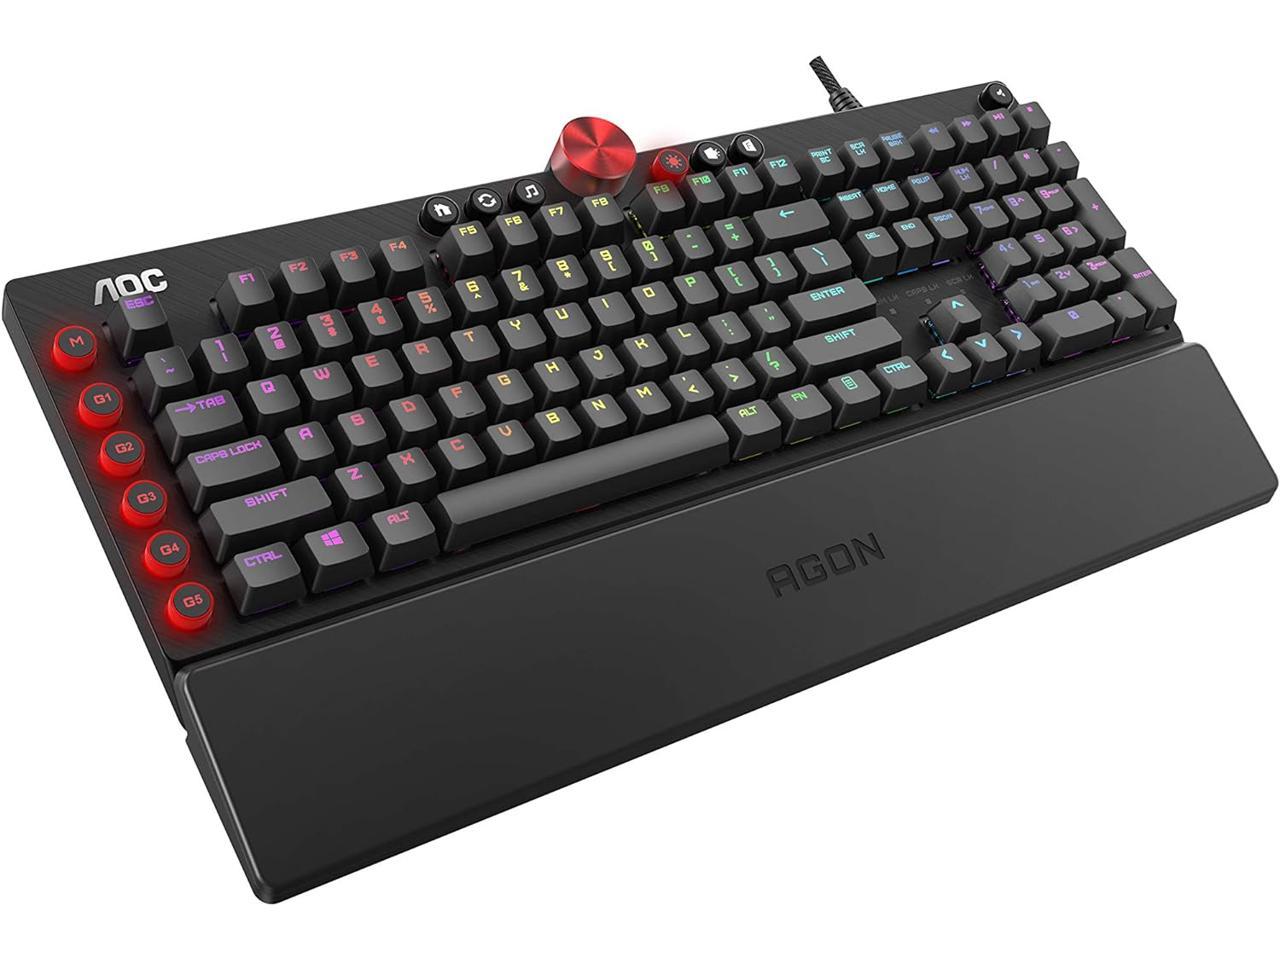 AOC Agon RGB Gaming Mechanical Keyboard (Cherry MX Blue Switches) $40.94 + Free Shipping